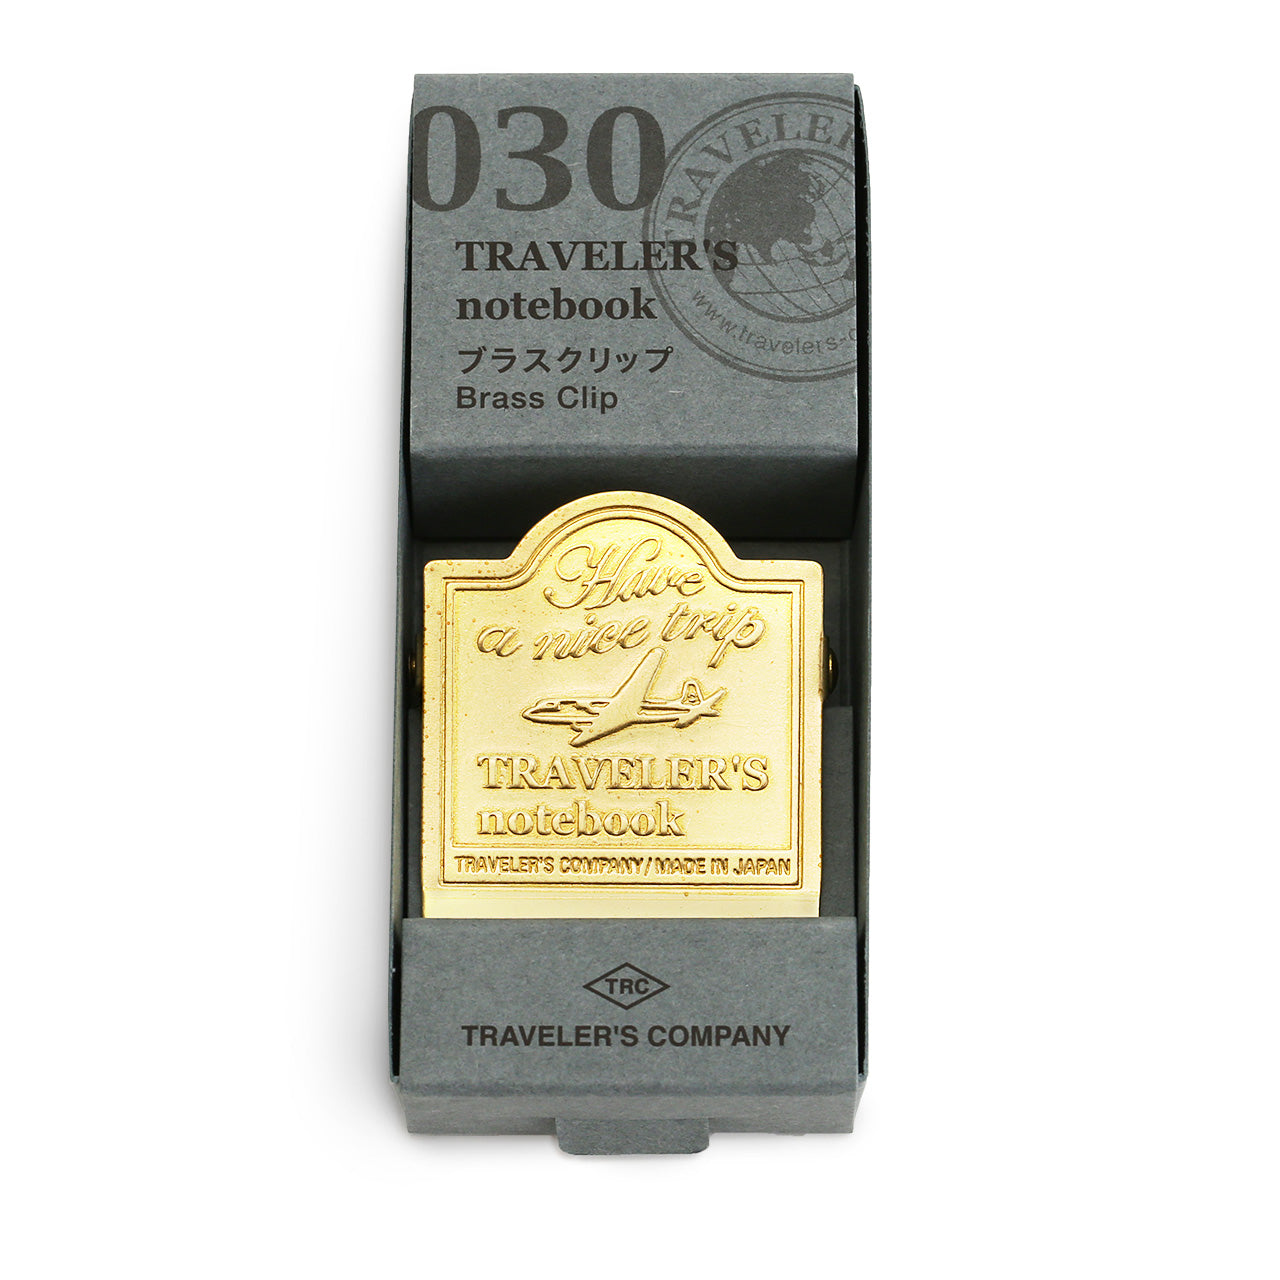 Have a nice trip Traveler's notebook Company Brass Clip